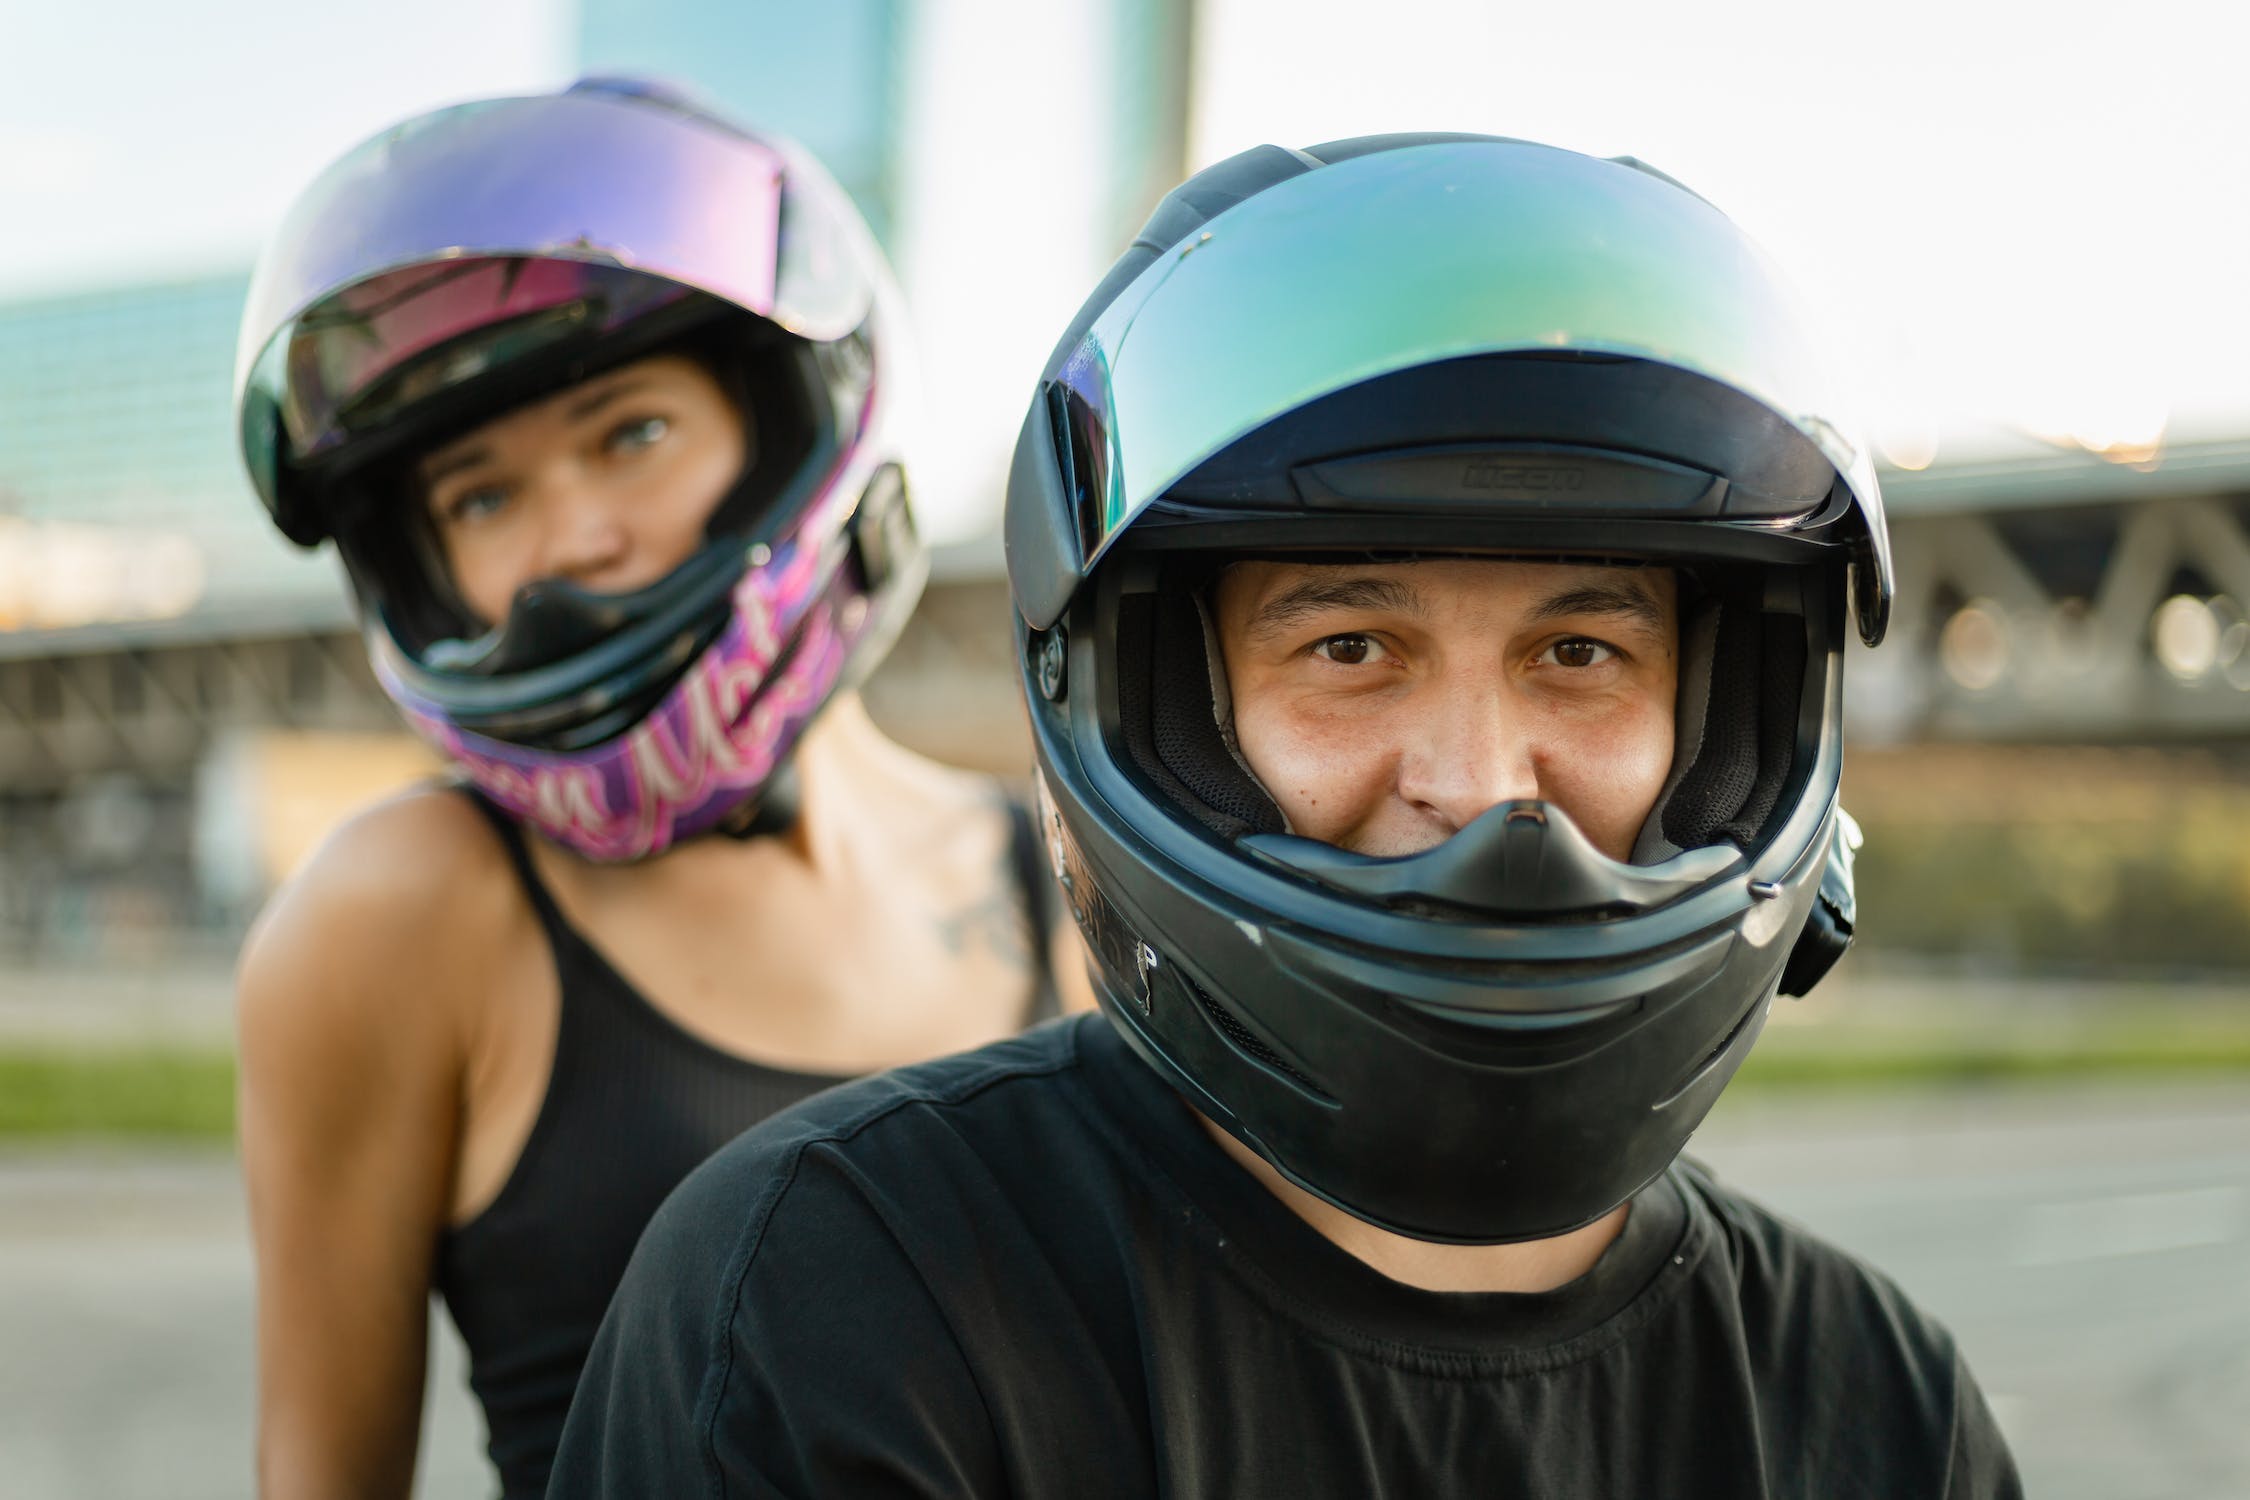 Helmet for motocycle